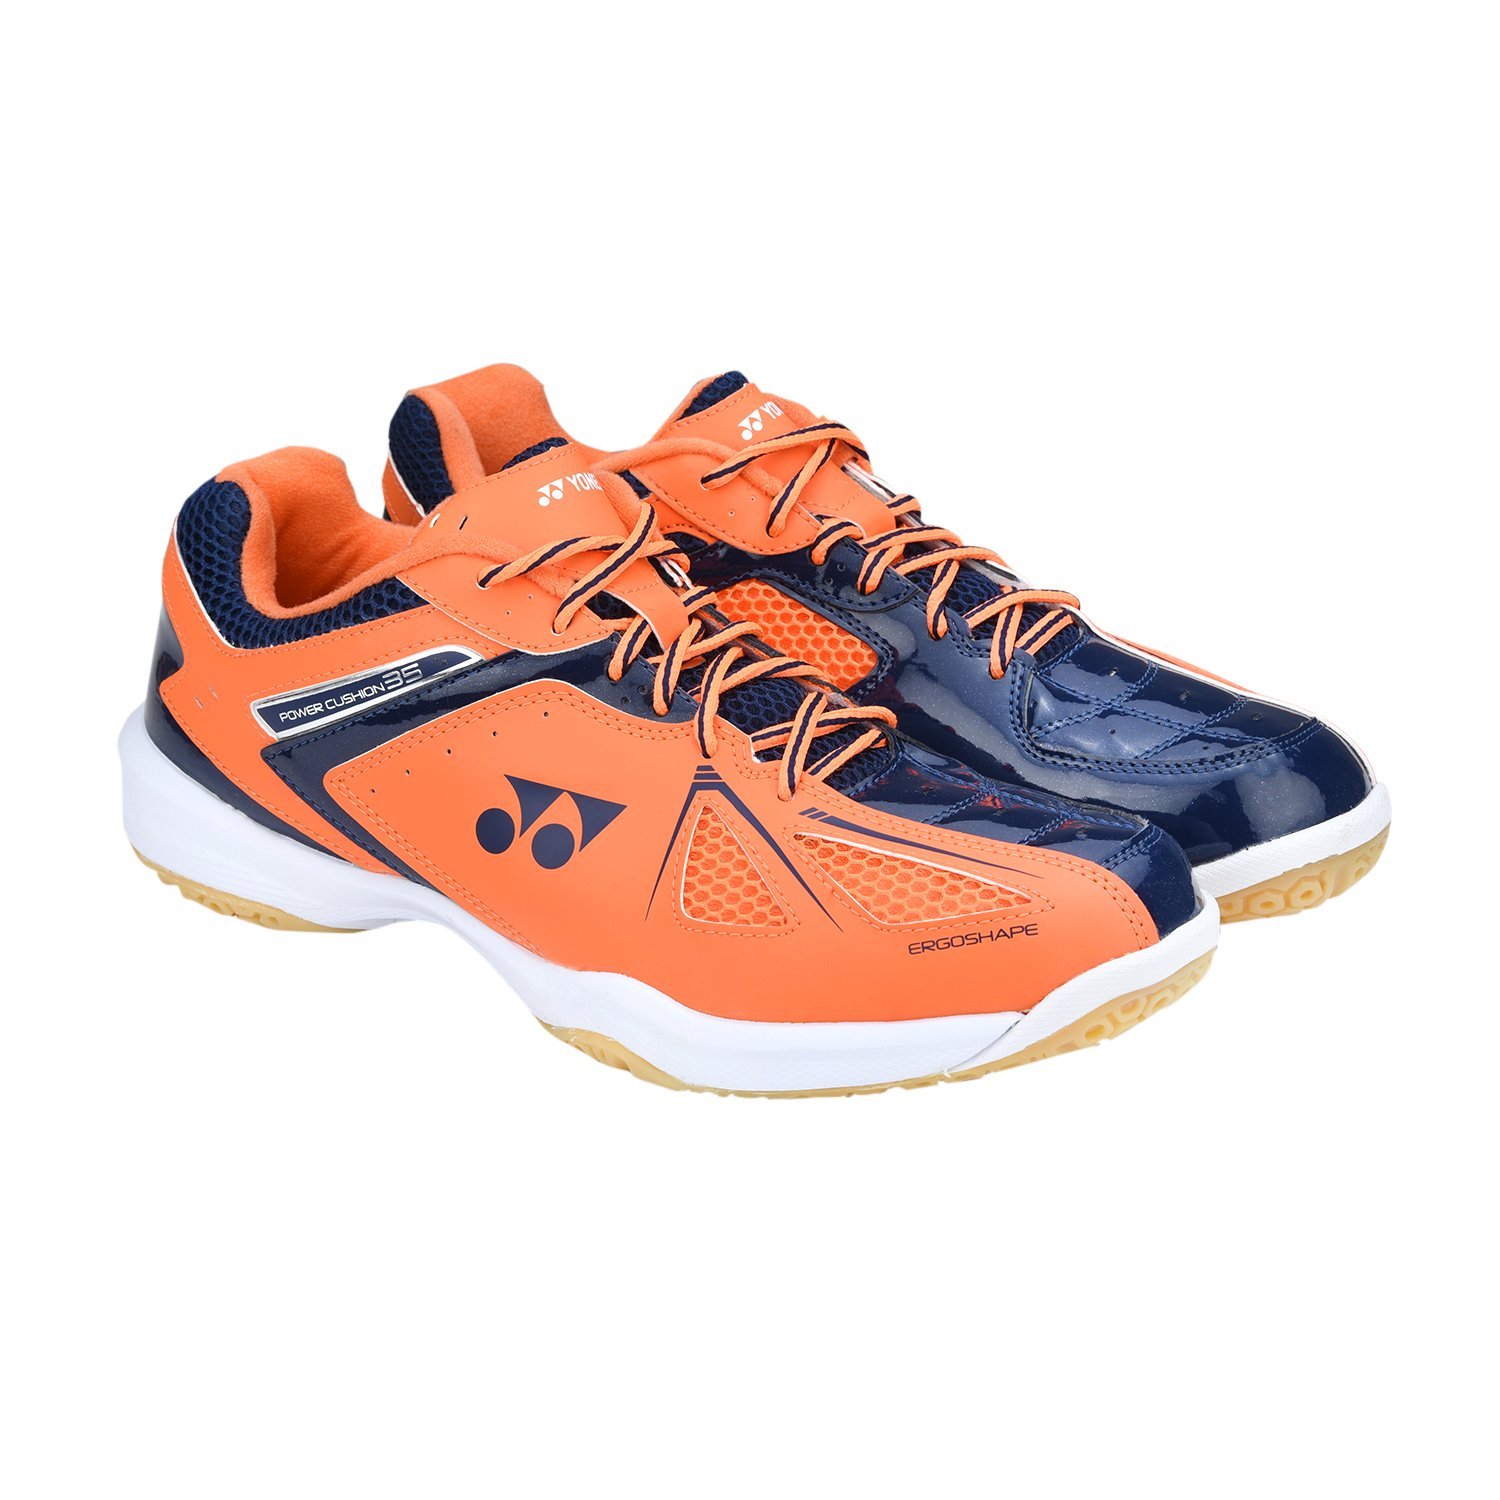 Buy Yonex Power Cushion Shb Badminton Shoes, (Orange) Online @ ₹4050 ...